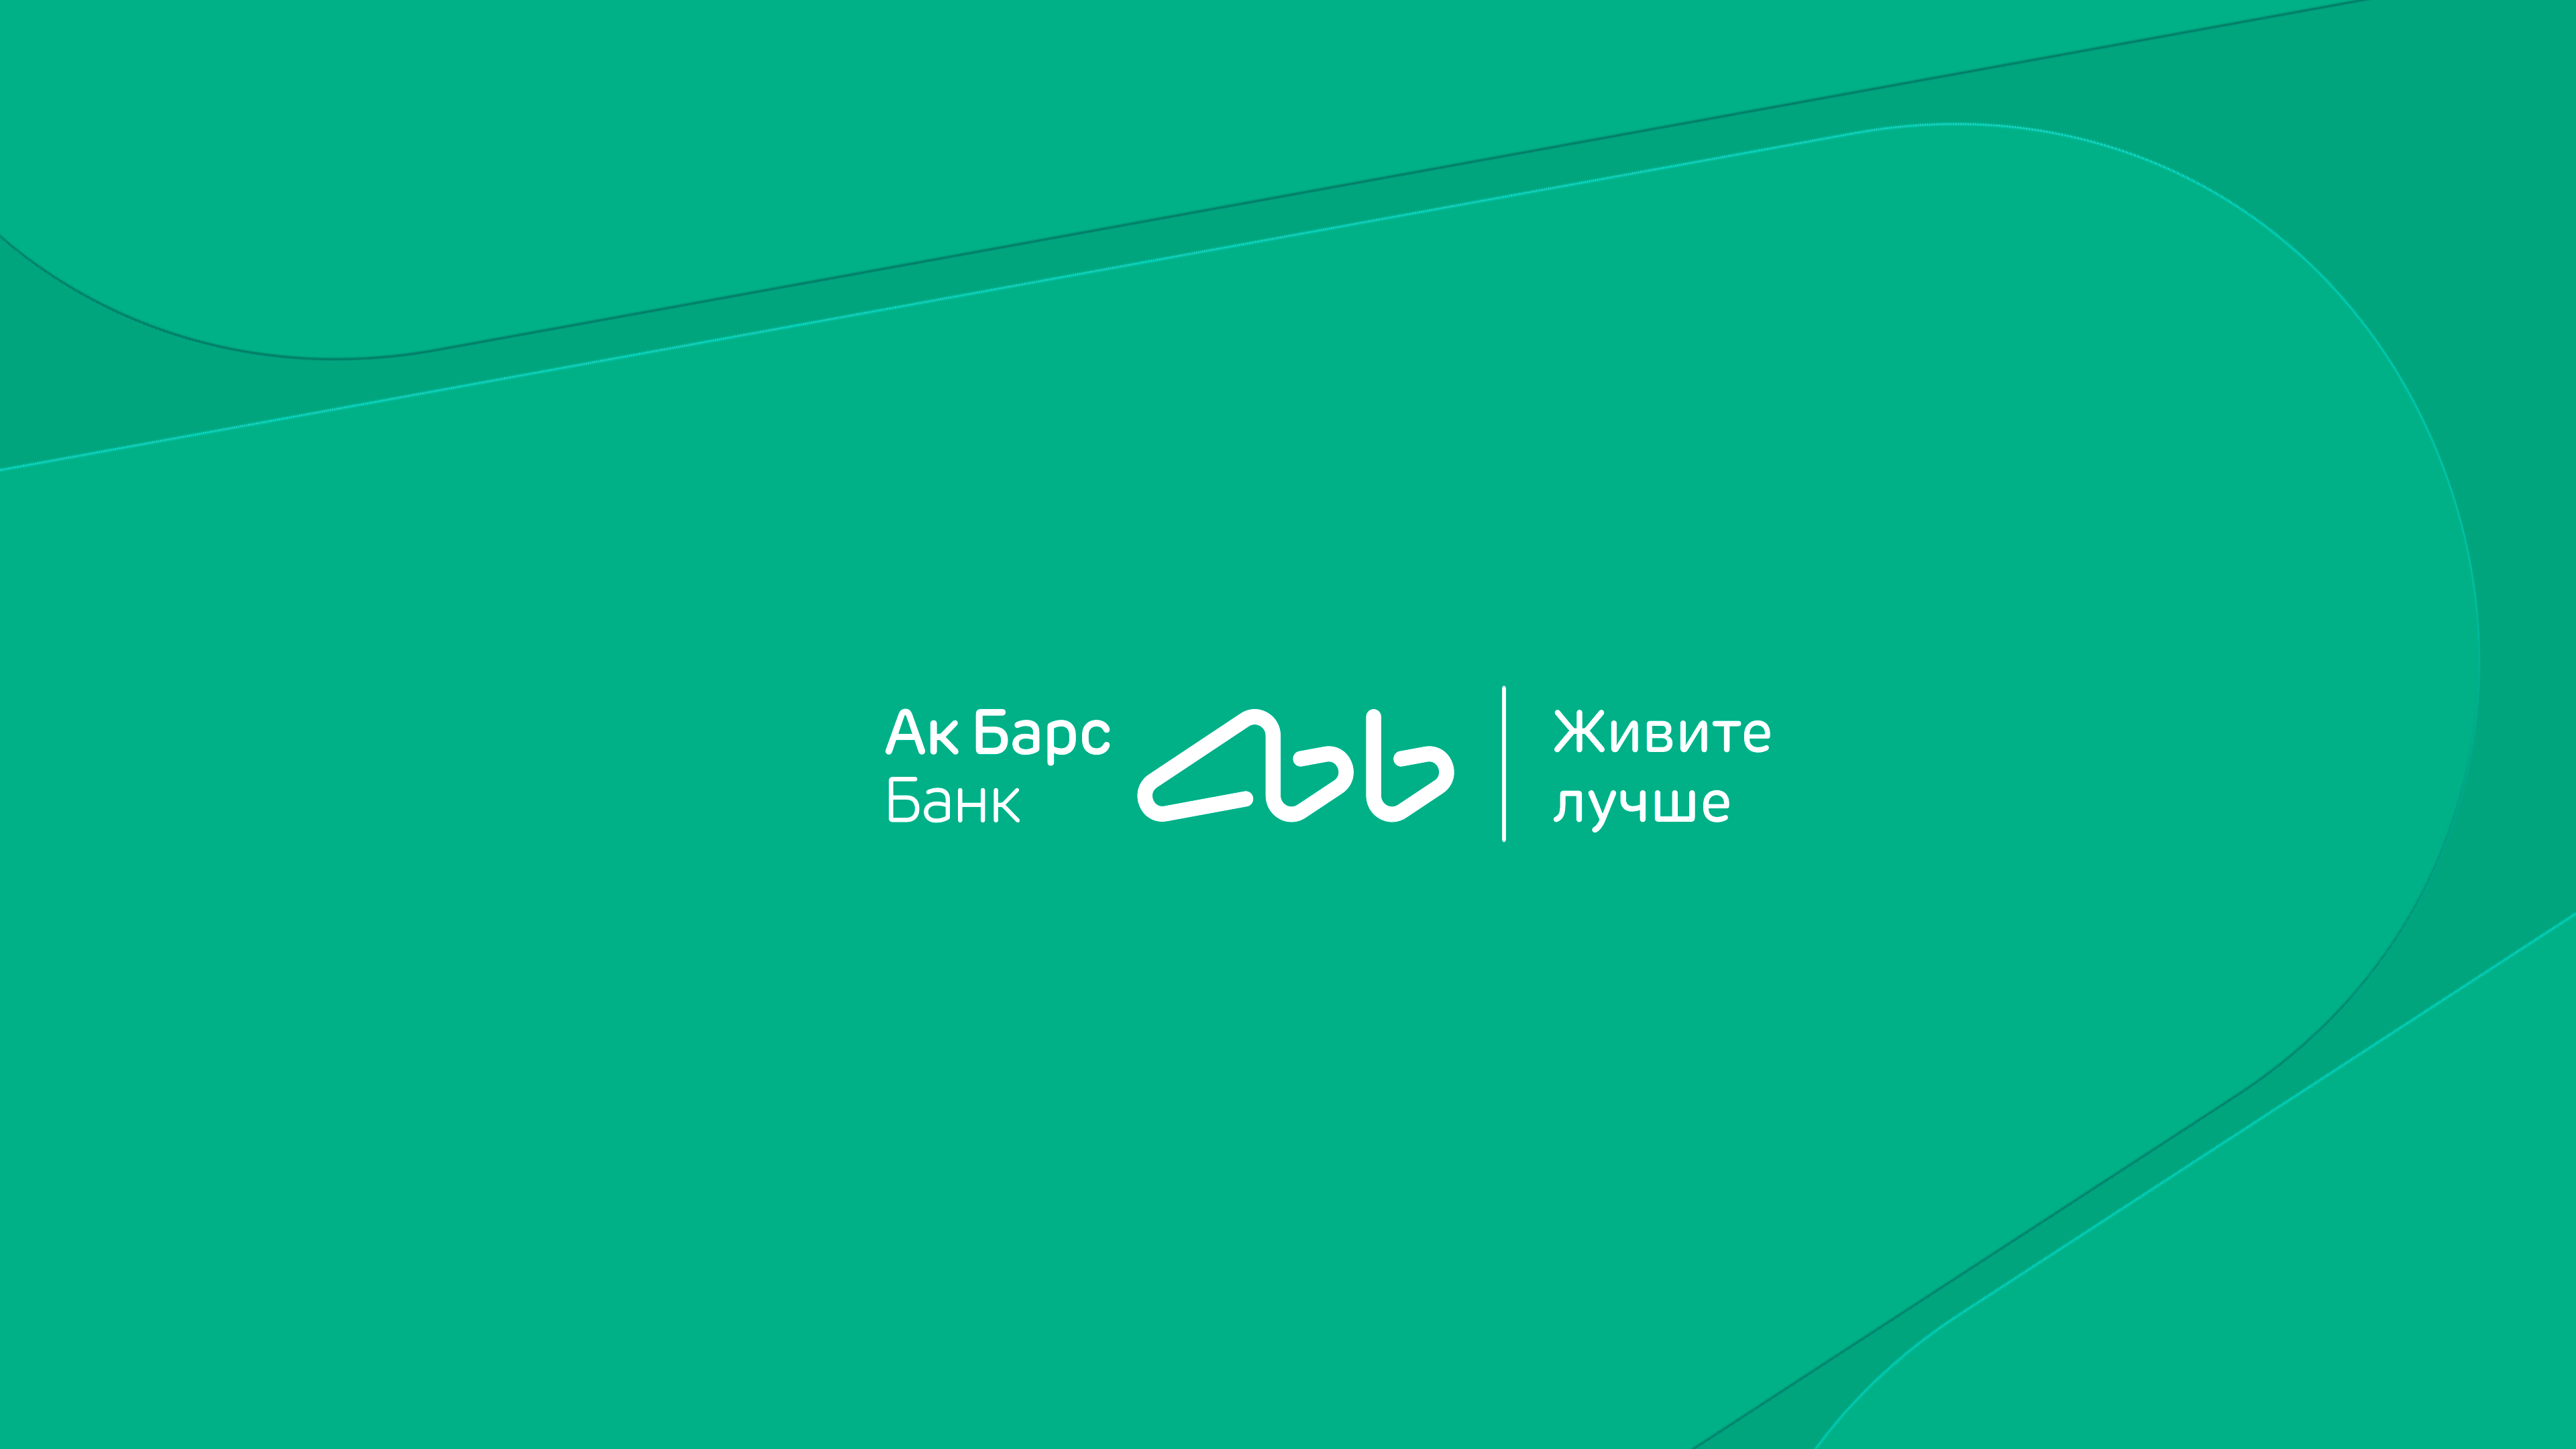 Ак барс банк новый. Бренд АК Барс банк. АК Барс банк факторинг. АК Барс банк logo. АК Барс банк малый бизнес.